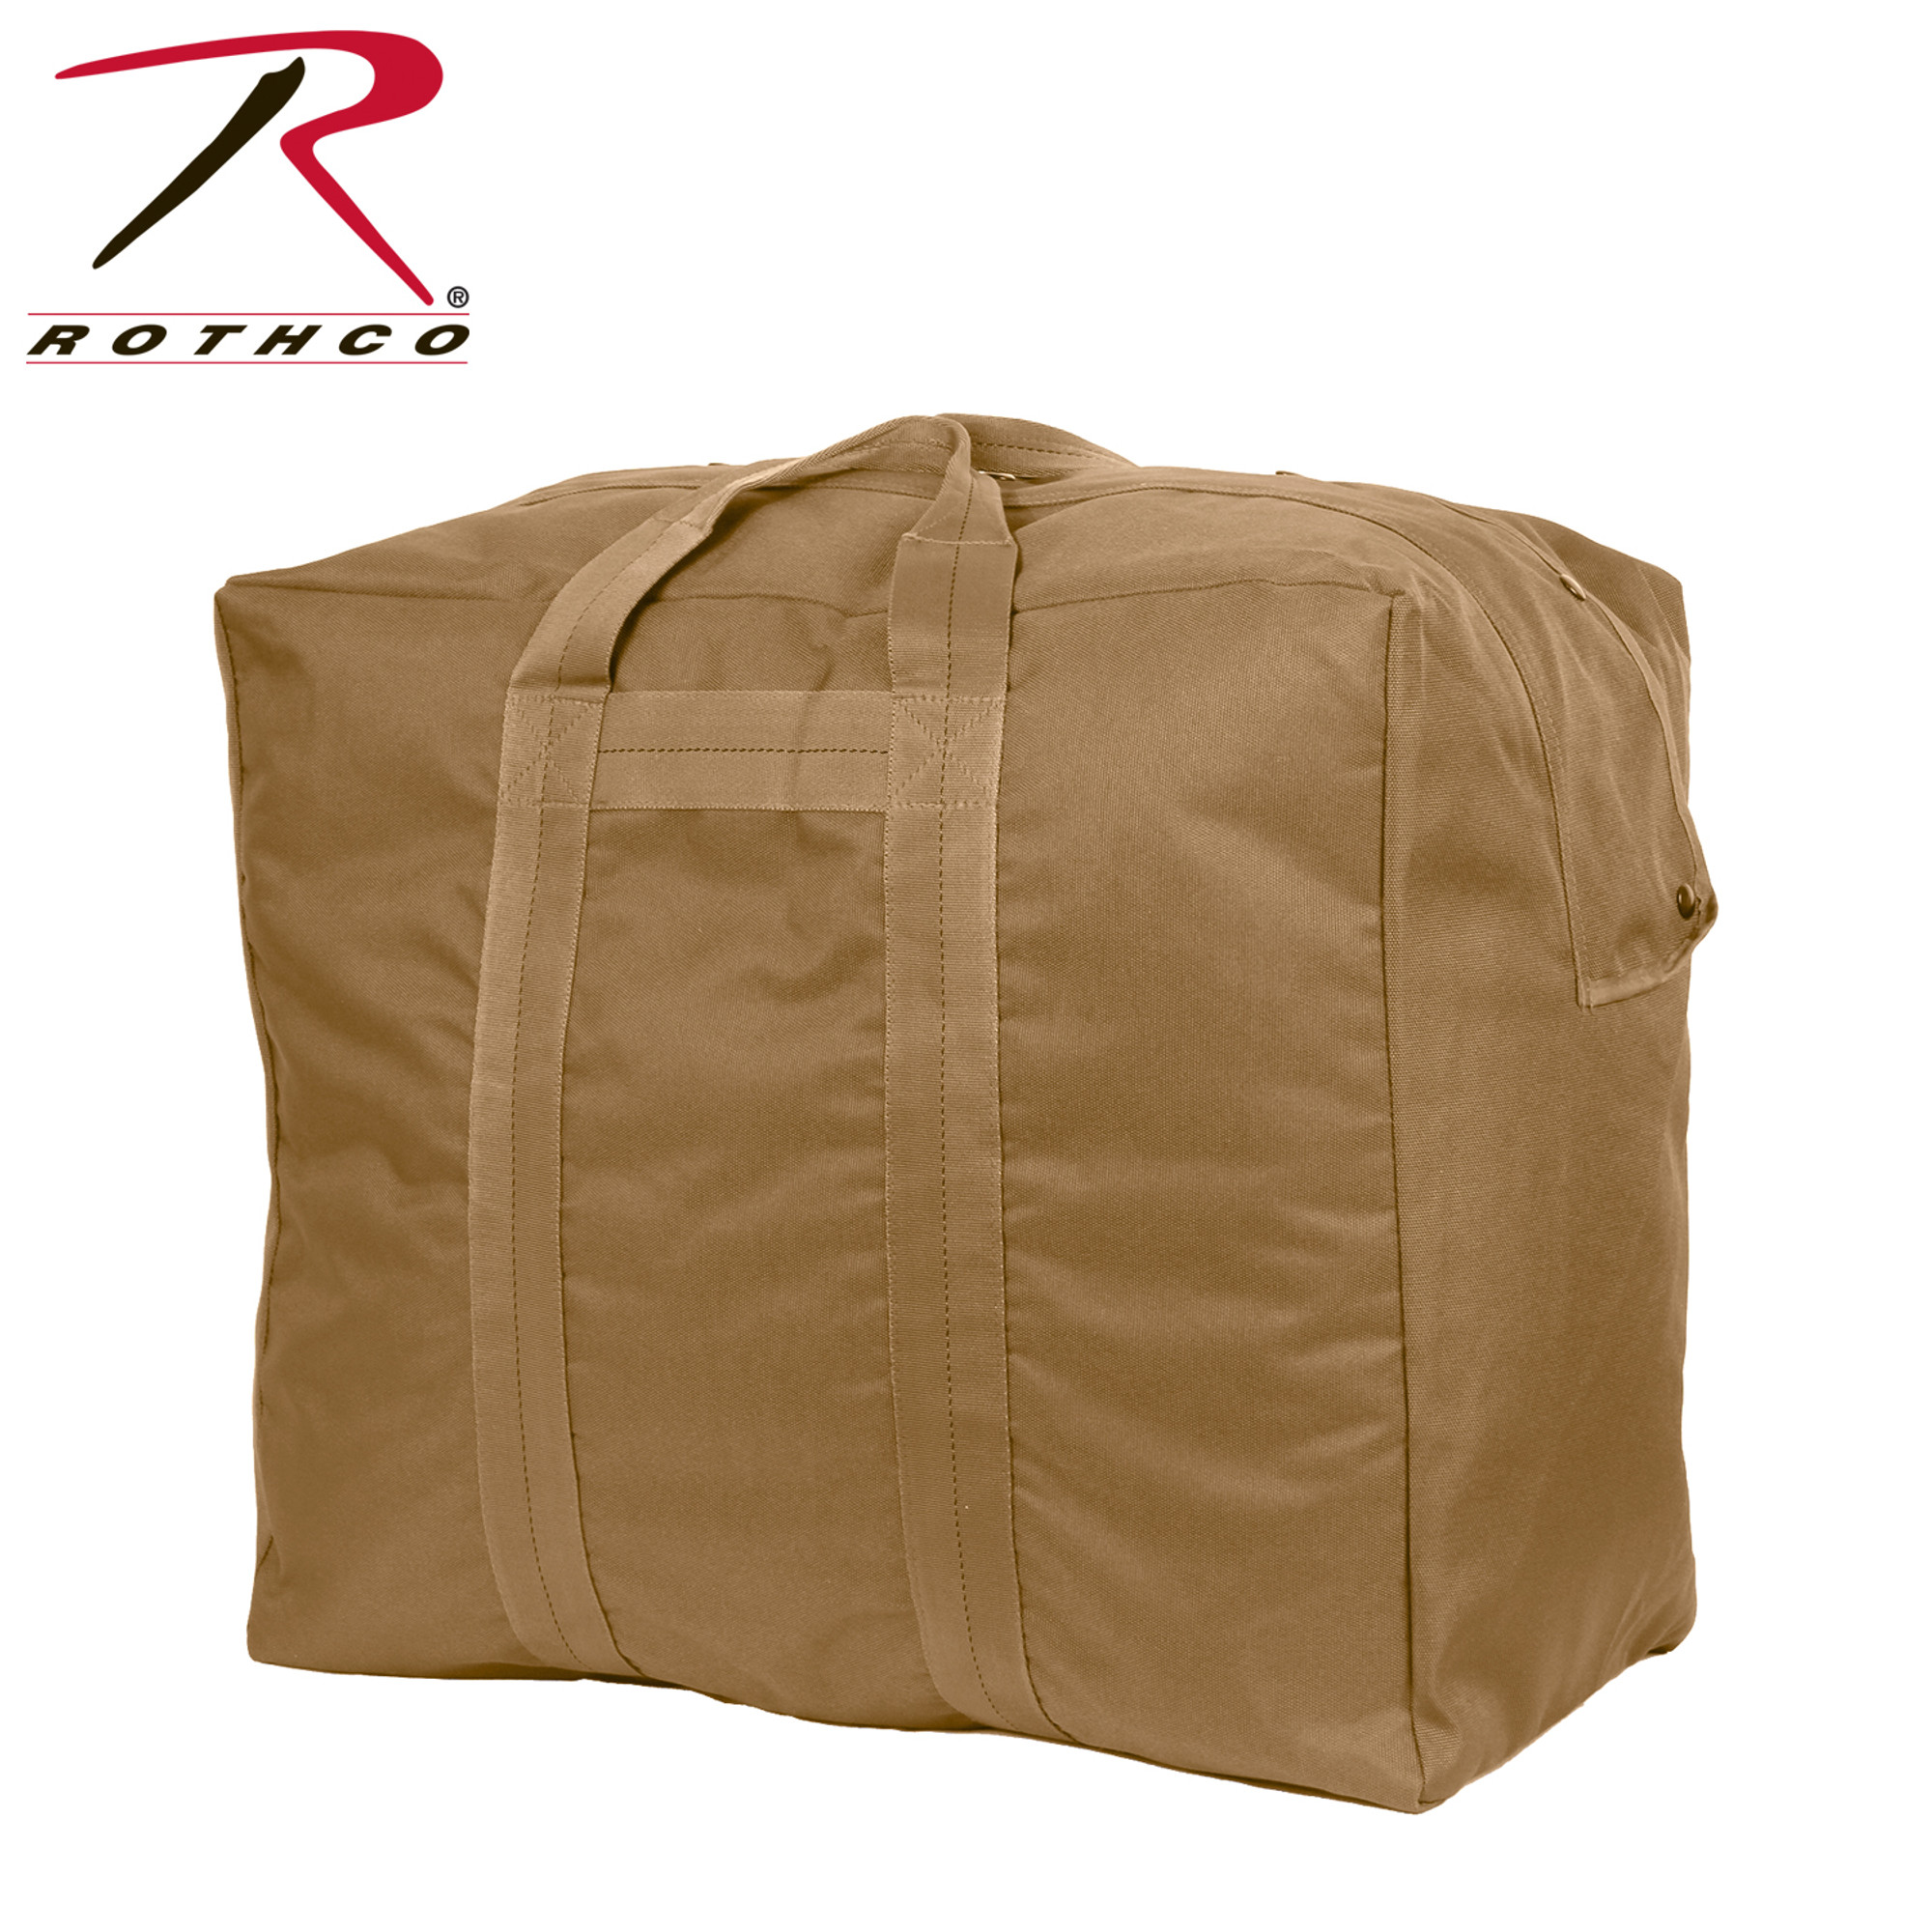 Enhanced Aviator Kit Bag - Coyote Brown